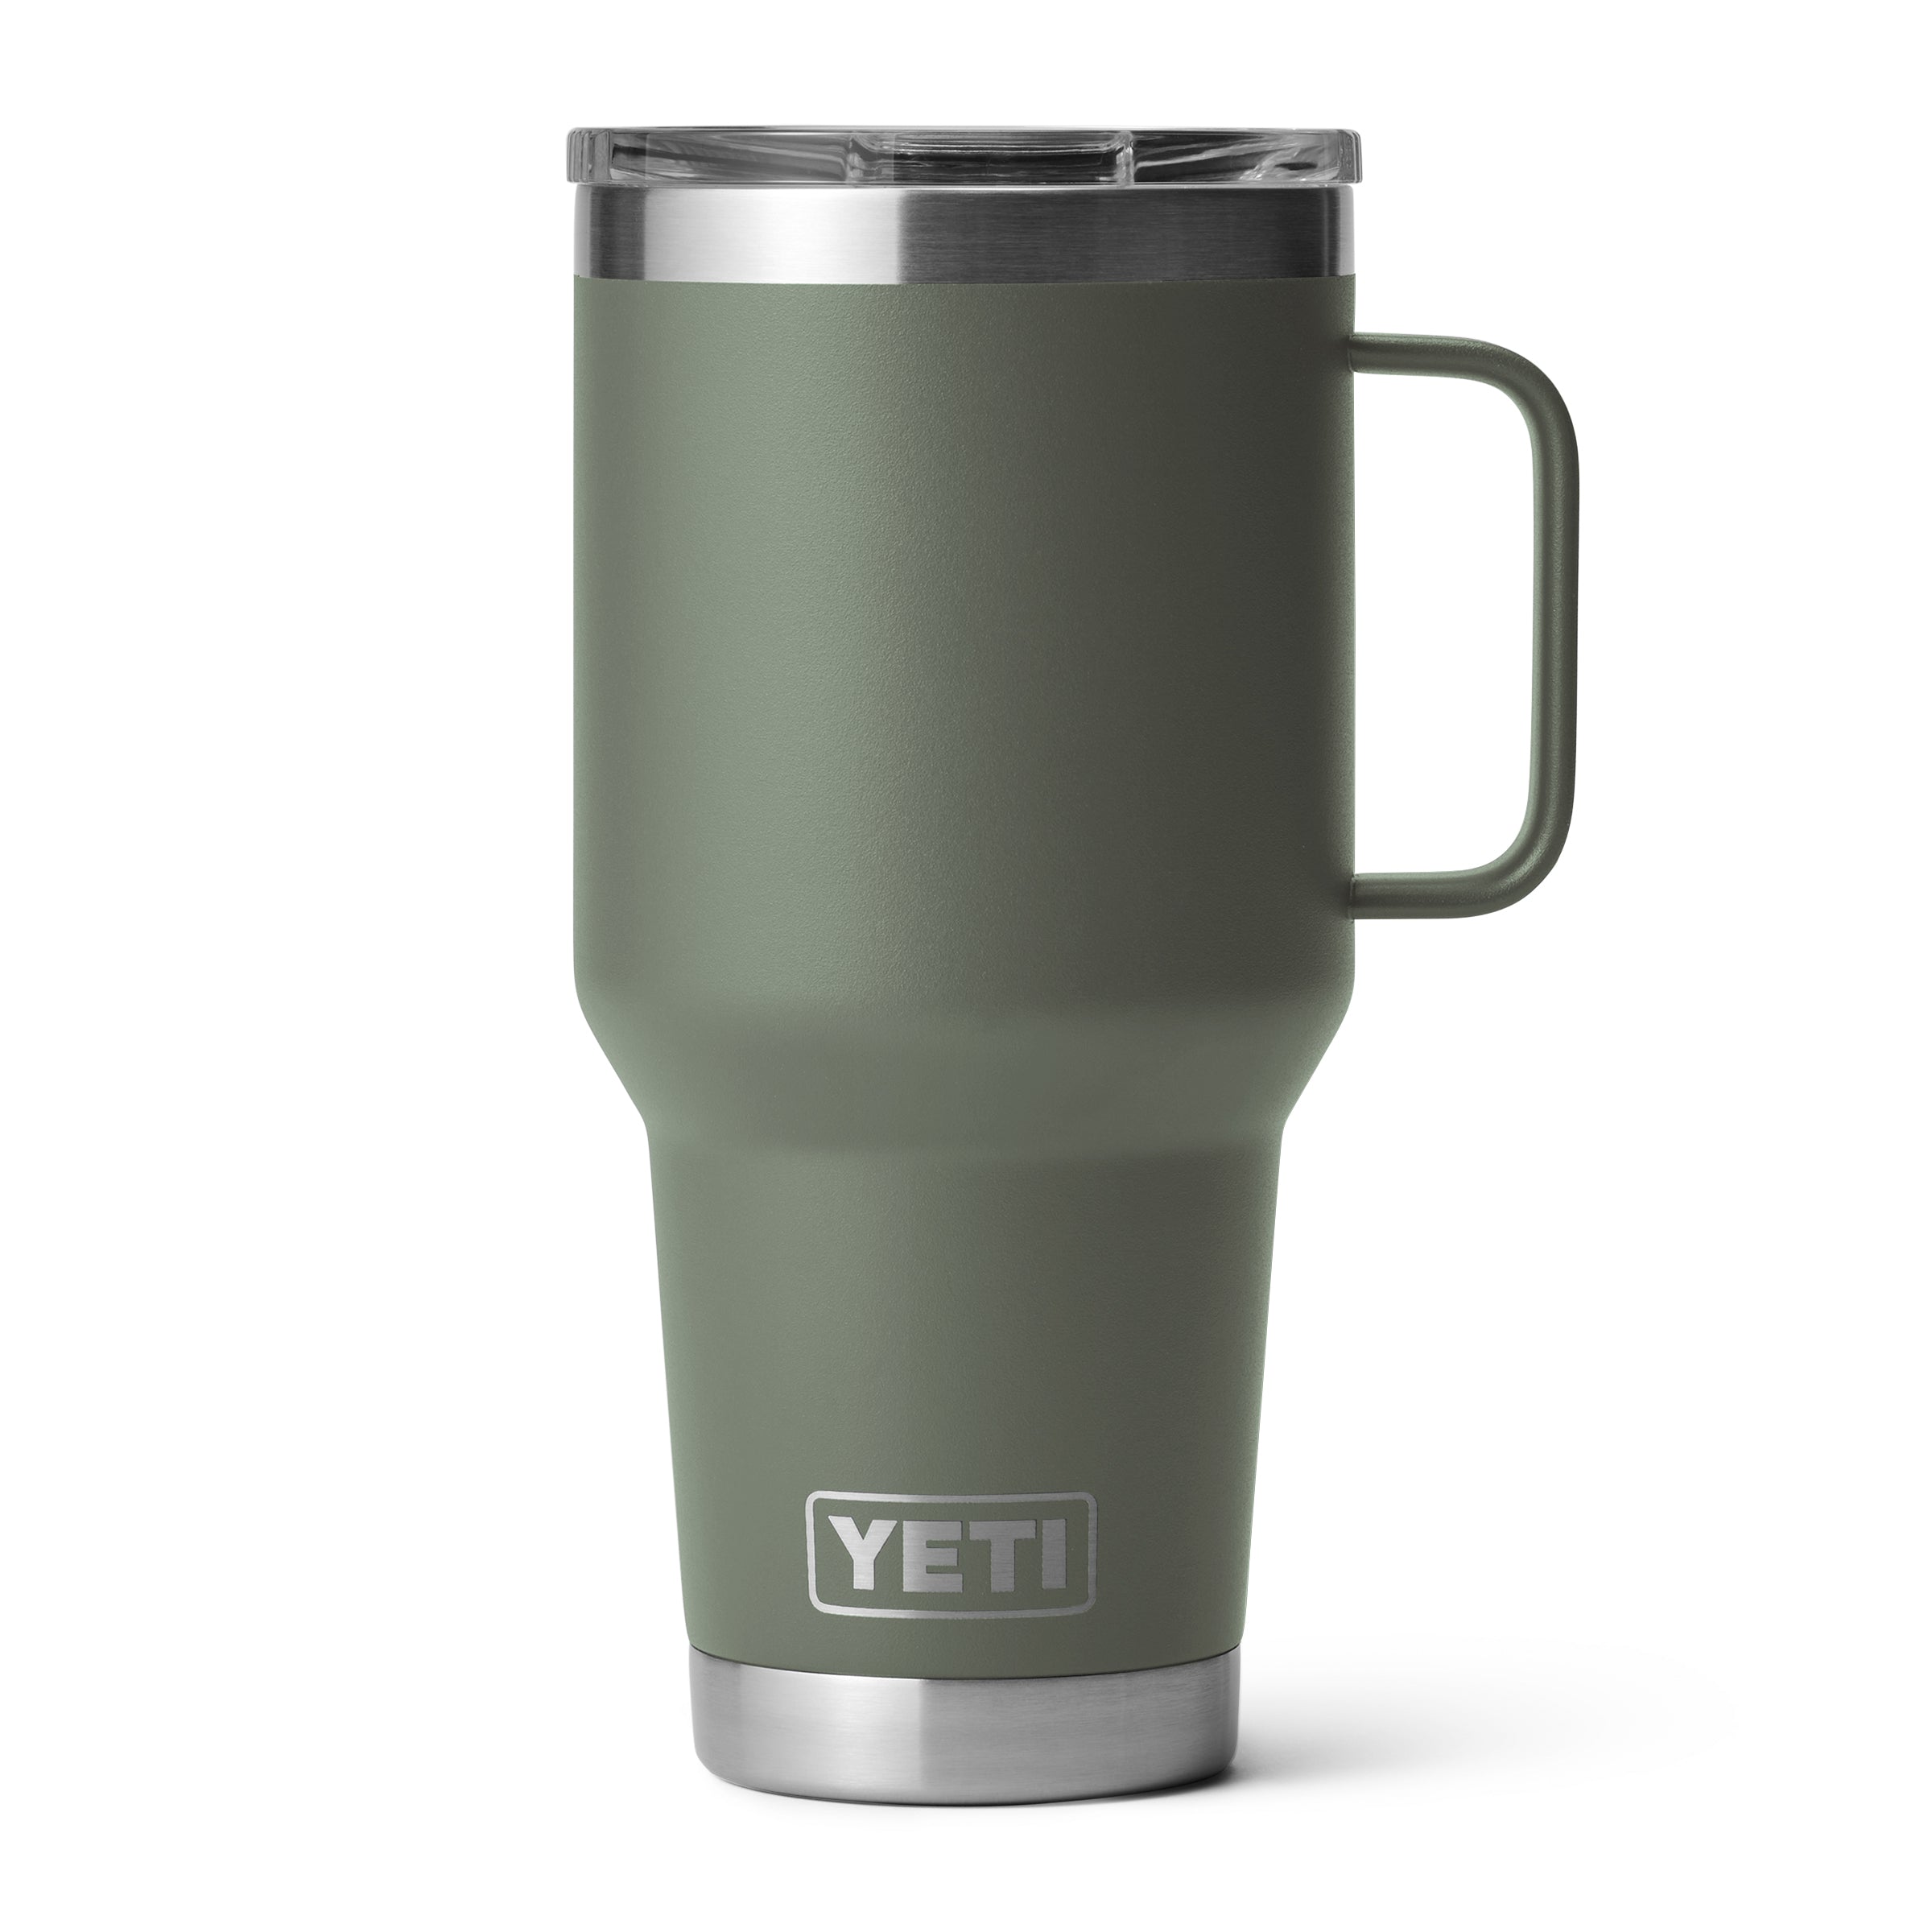 YETI Rambler 30 oz Travel Mug in color: Camp Green.